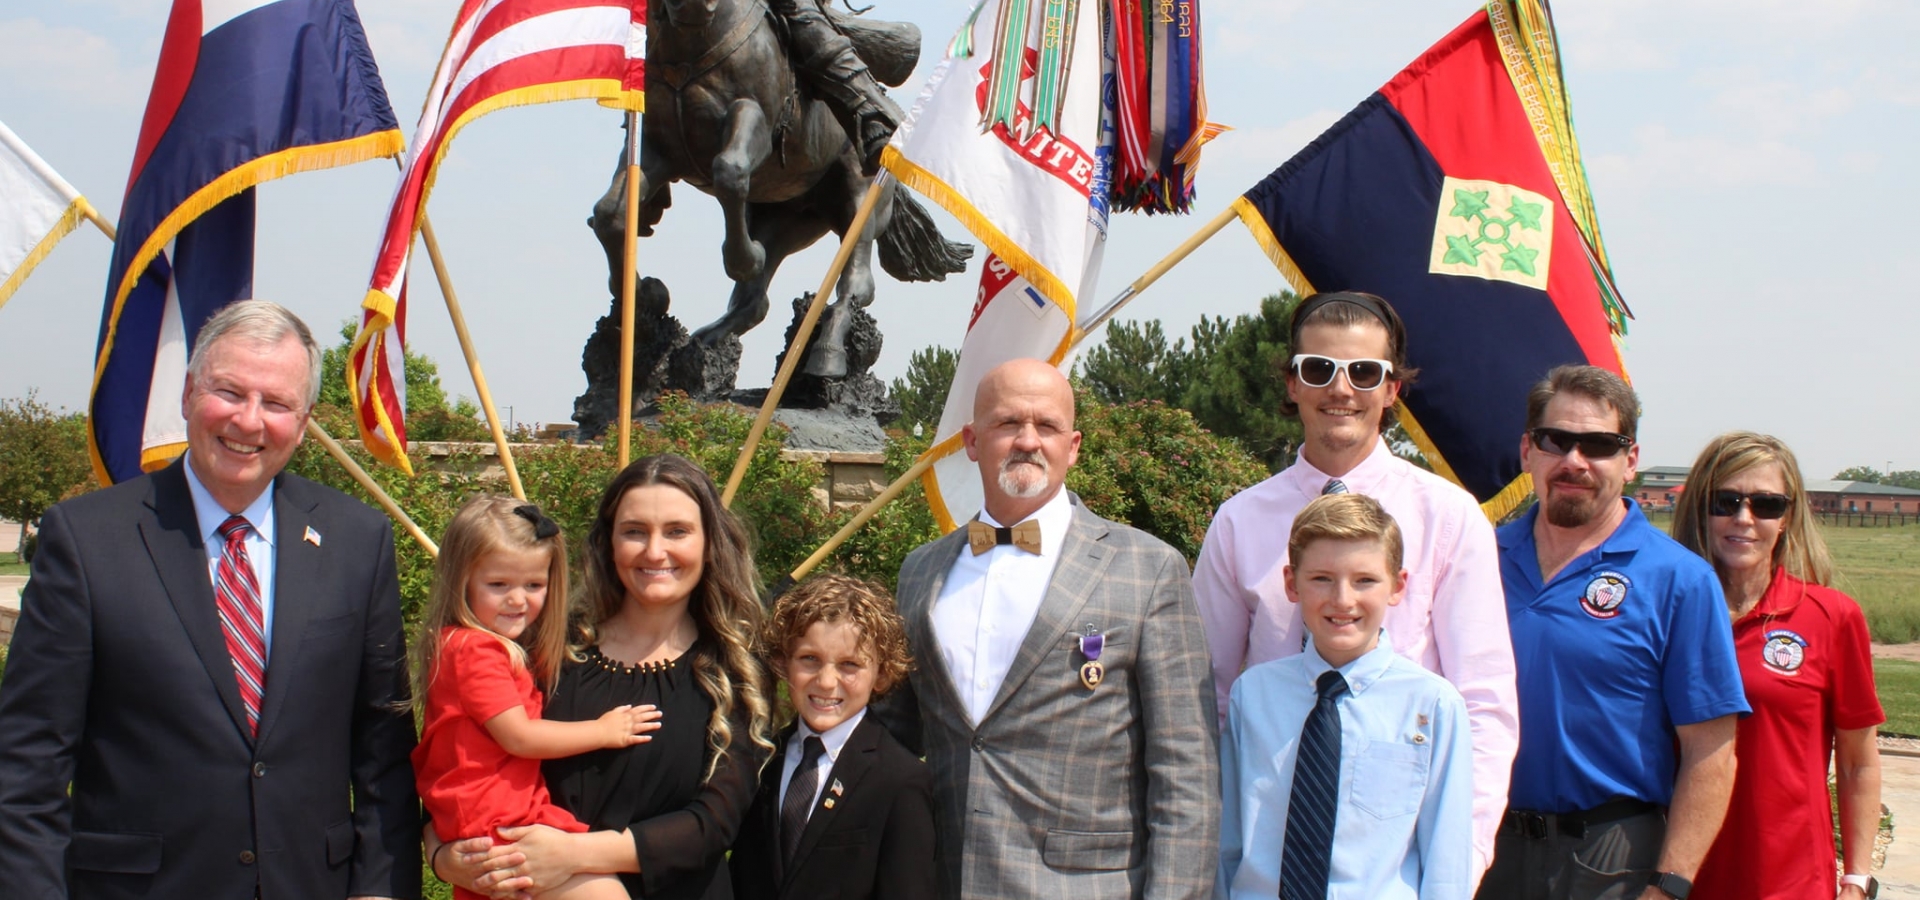 Congressman Lamborn with a veteran and family.